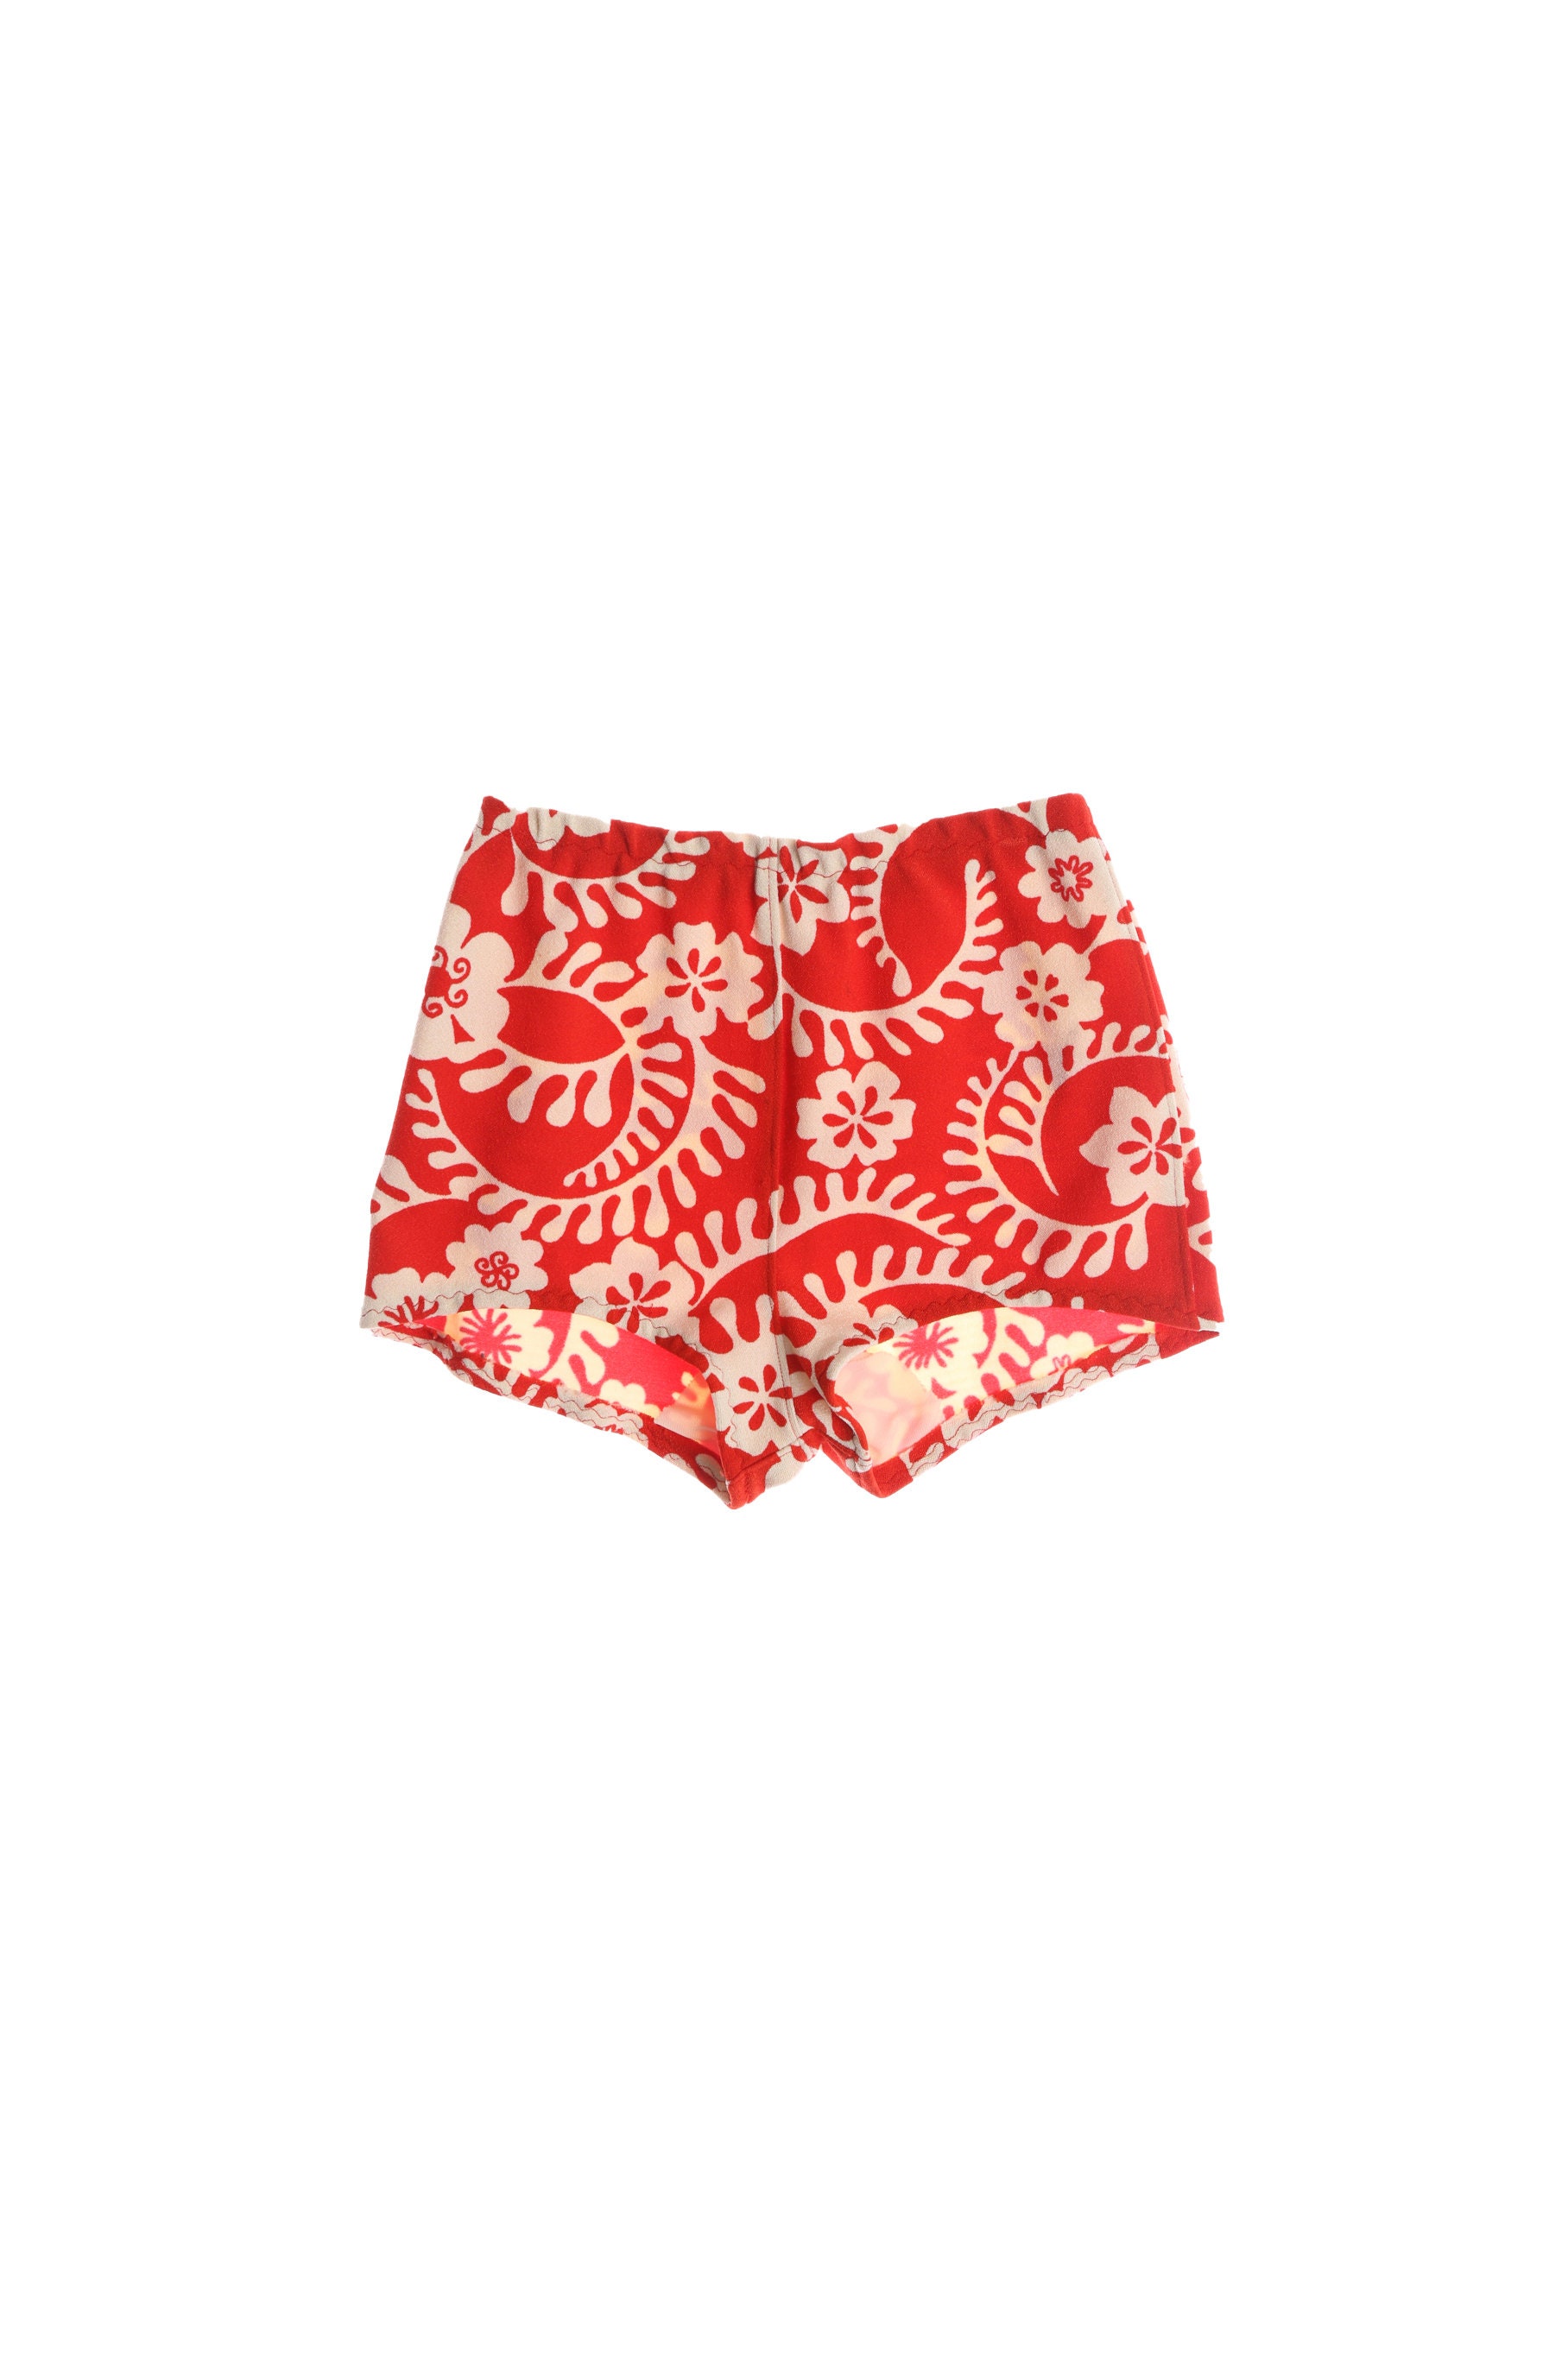 HARRYSTORE Women Shorts Women Summer Lace Printing Shorts Mid Waist Short Pants,Girls Casual Beach Holiday Workout Walking Underwear Tankinis 